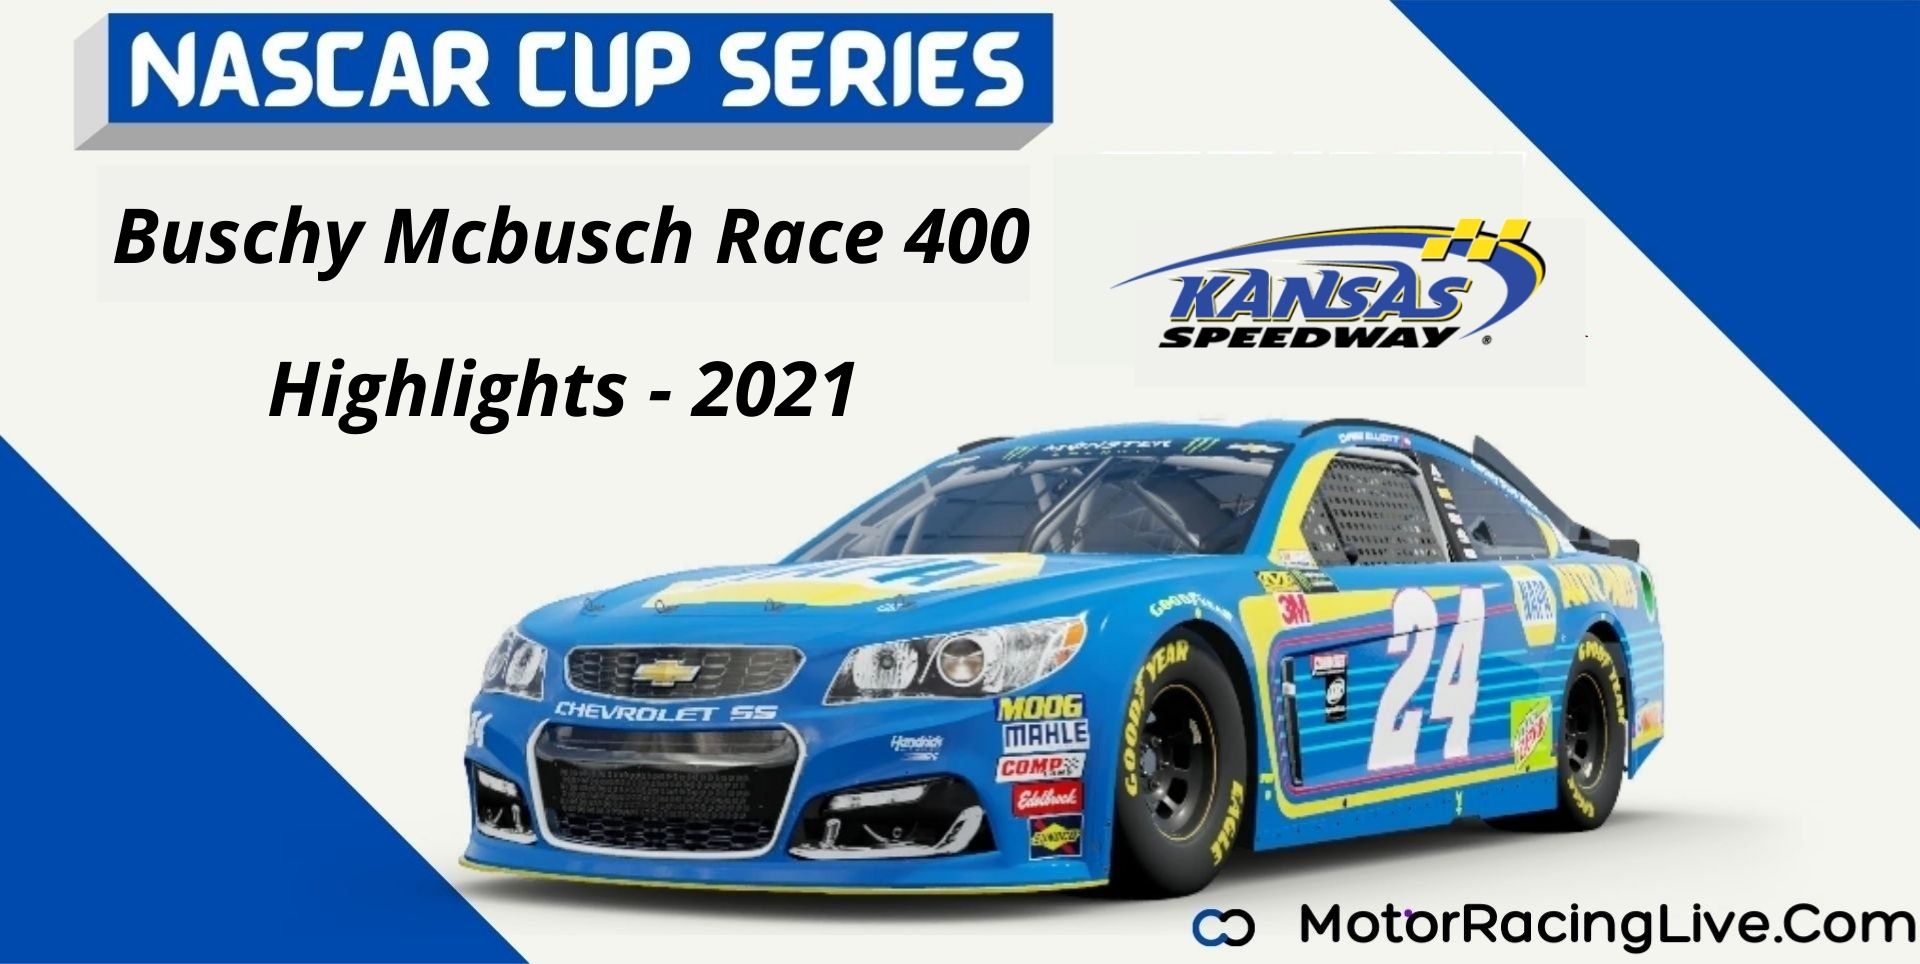 Buschy Mcbusch Race 400 Highlights 2021 NASCAR Cup Series